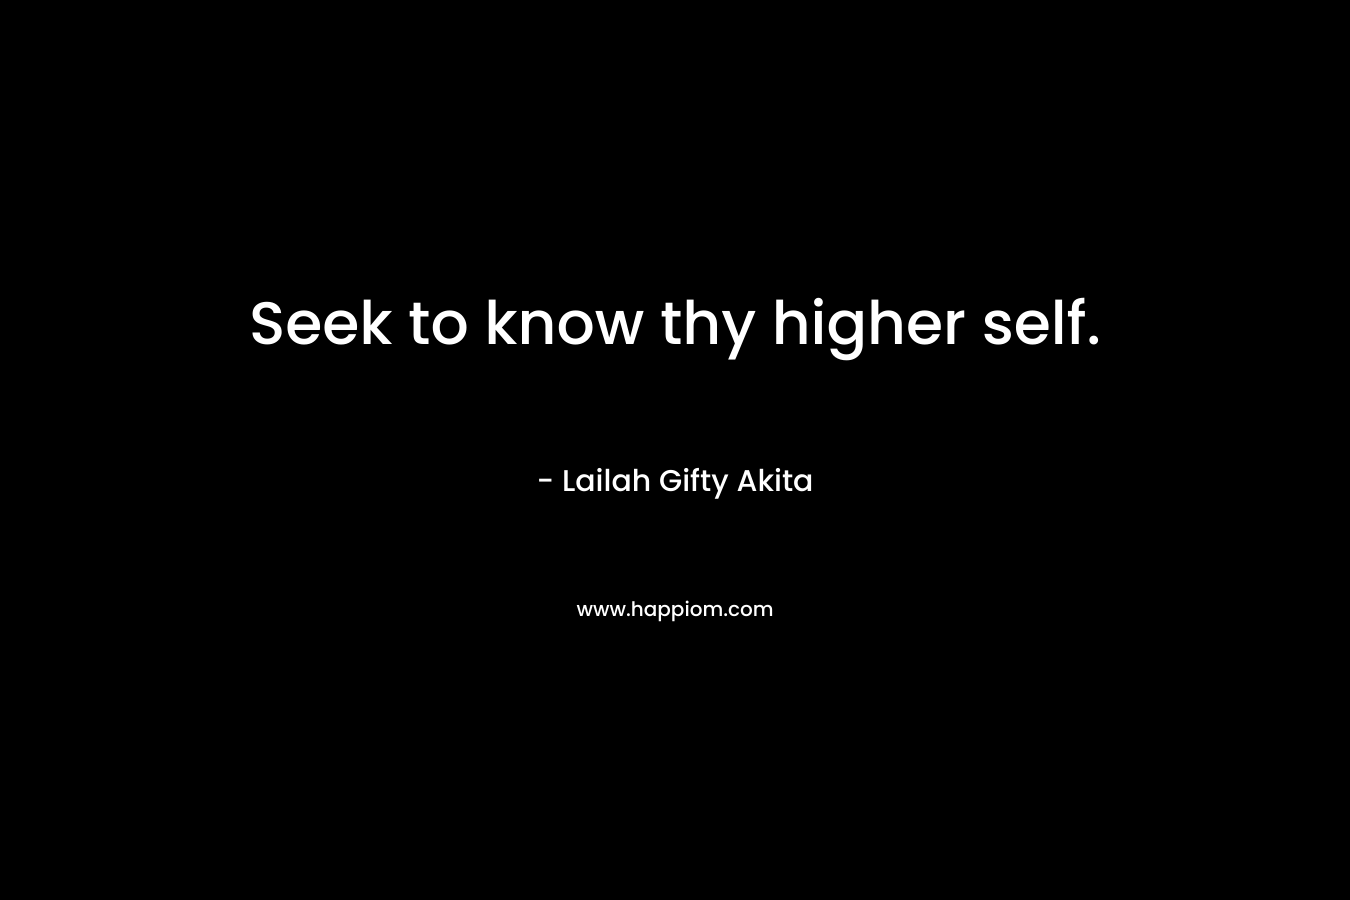 Seek to know thy higher self.